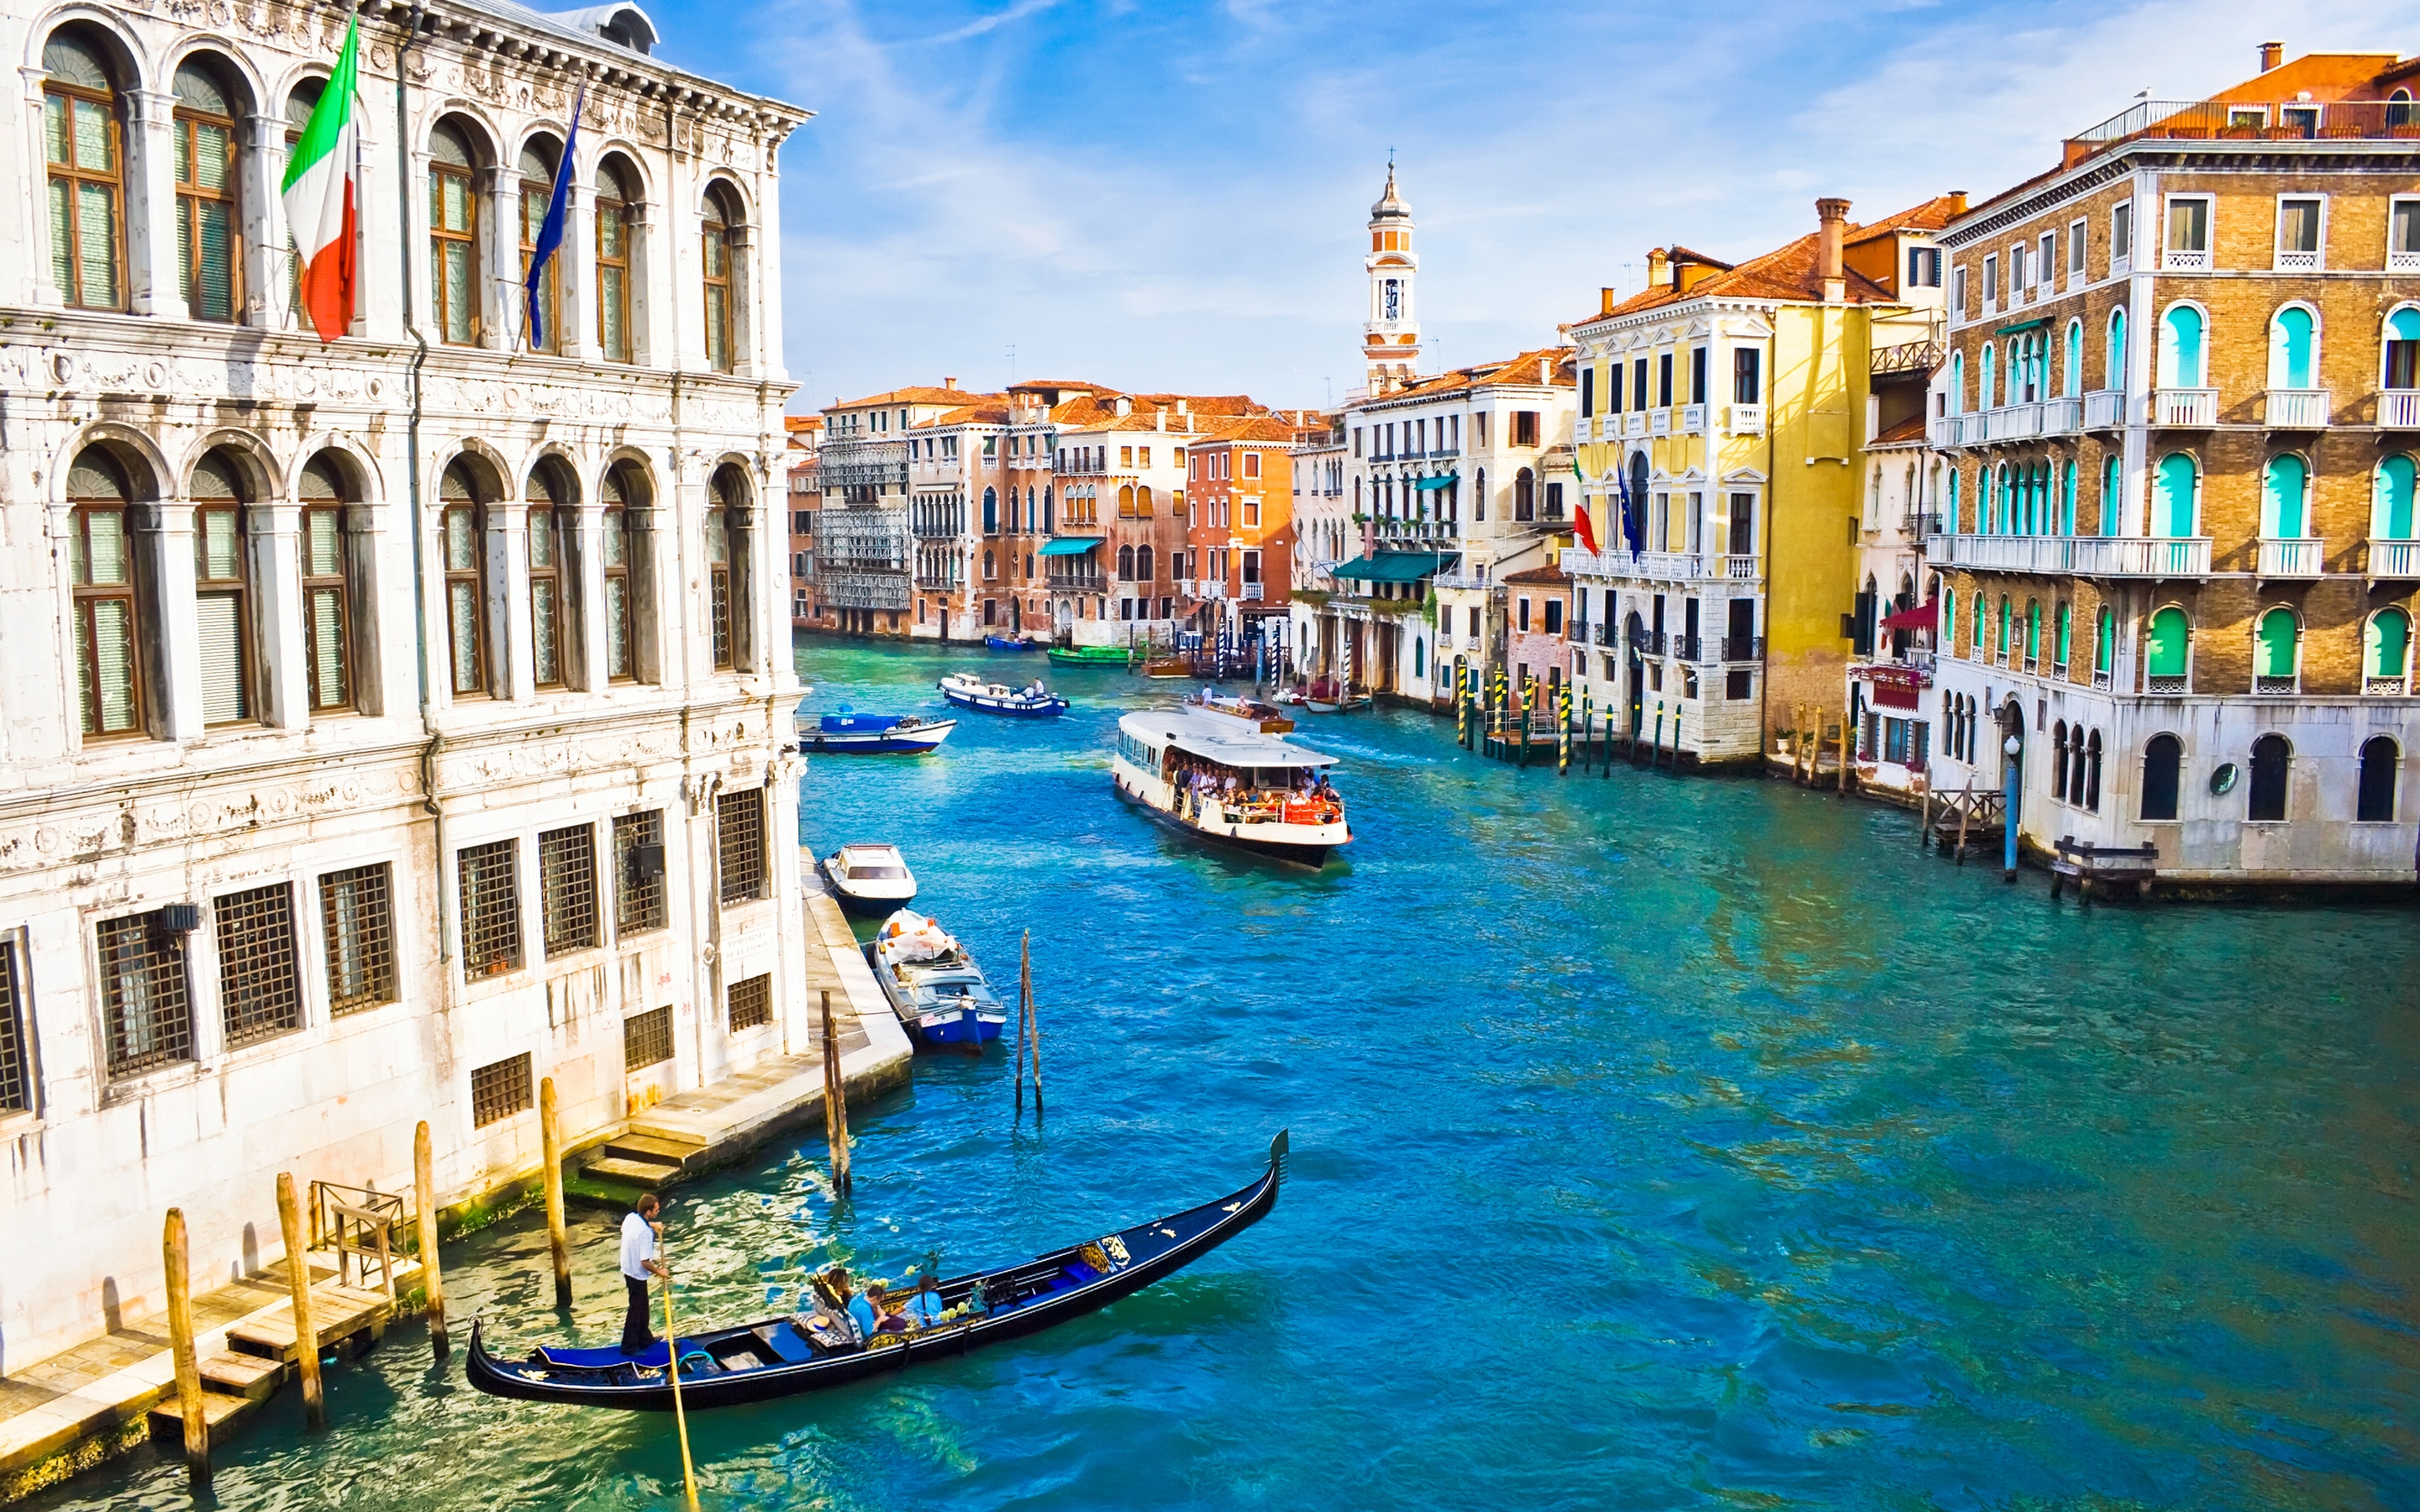 Beautiful Venice Canal for 2880 x 1800 Retina Display resolution